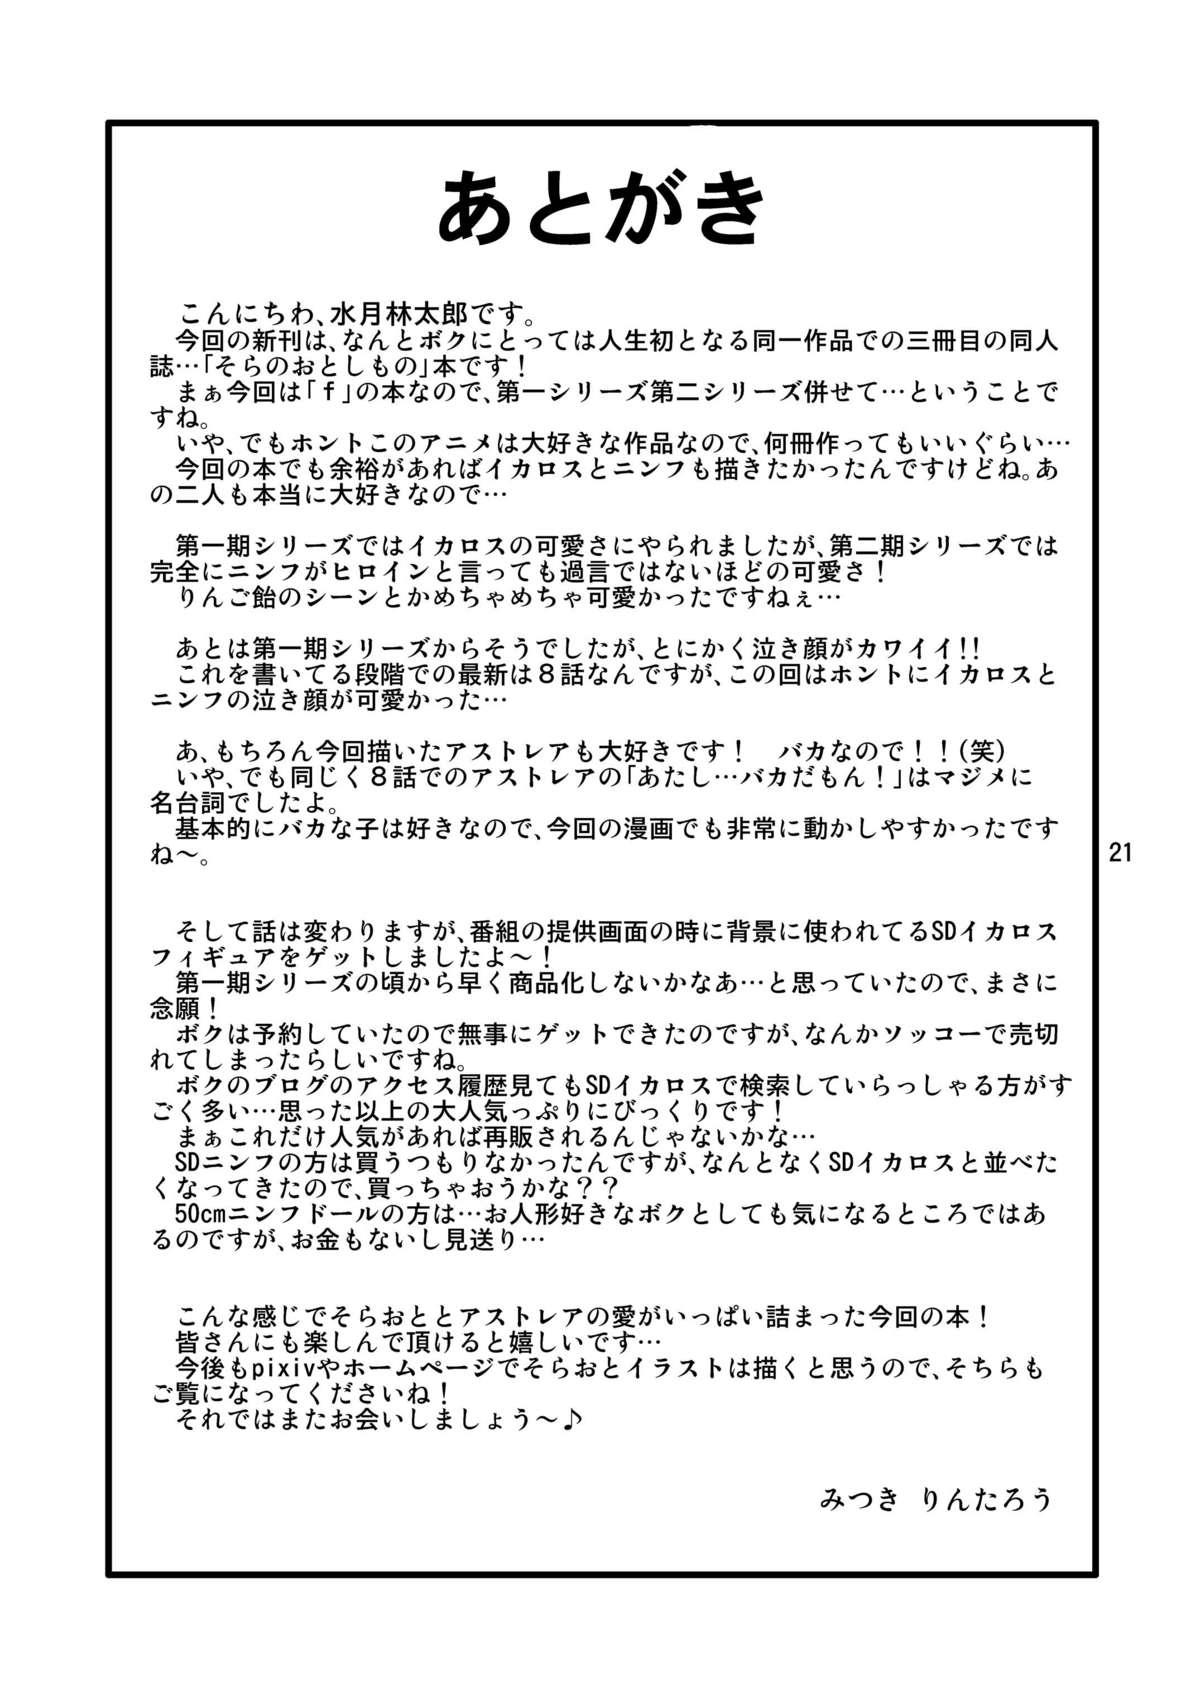 Culazo Oshiri no Tanima ni Insert!! - Sora no otoshimono Pussylick - Page 21